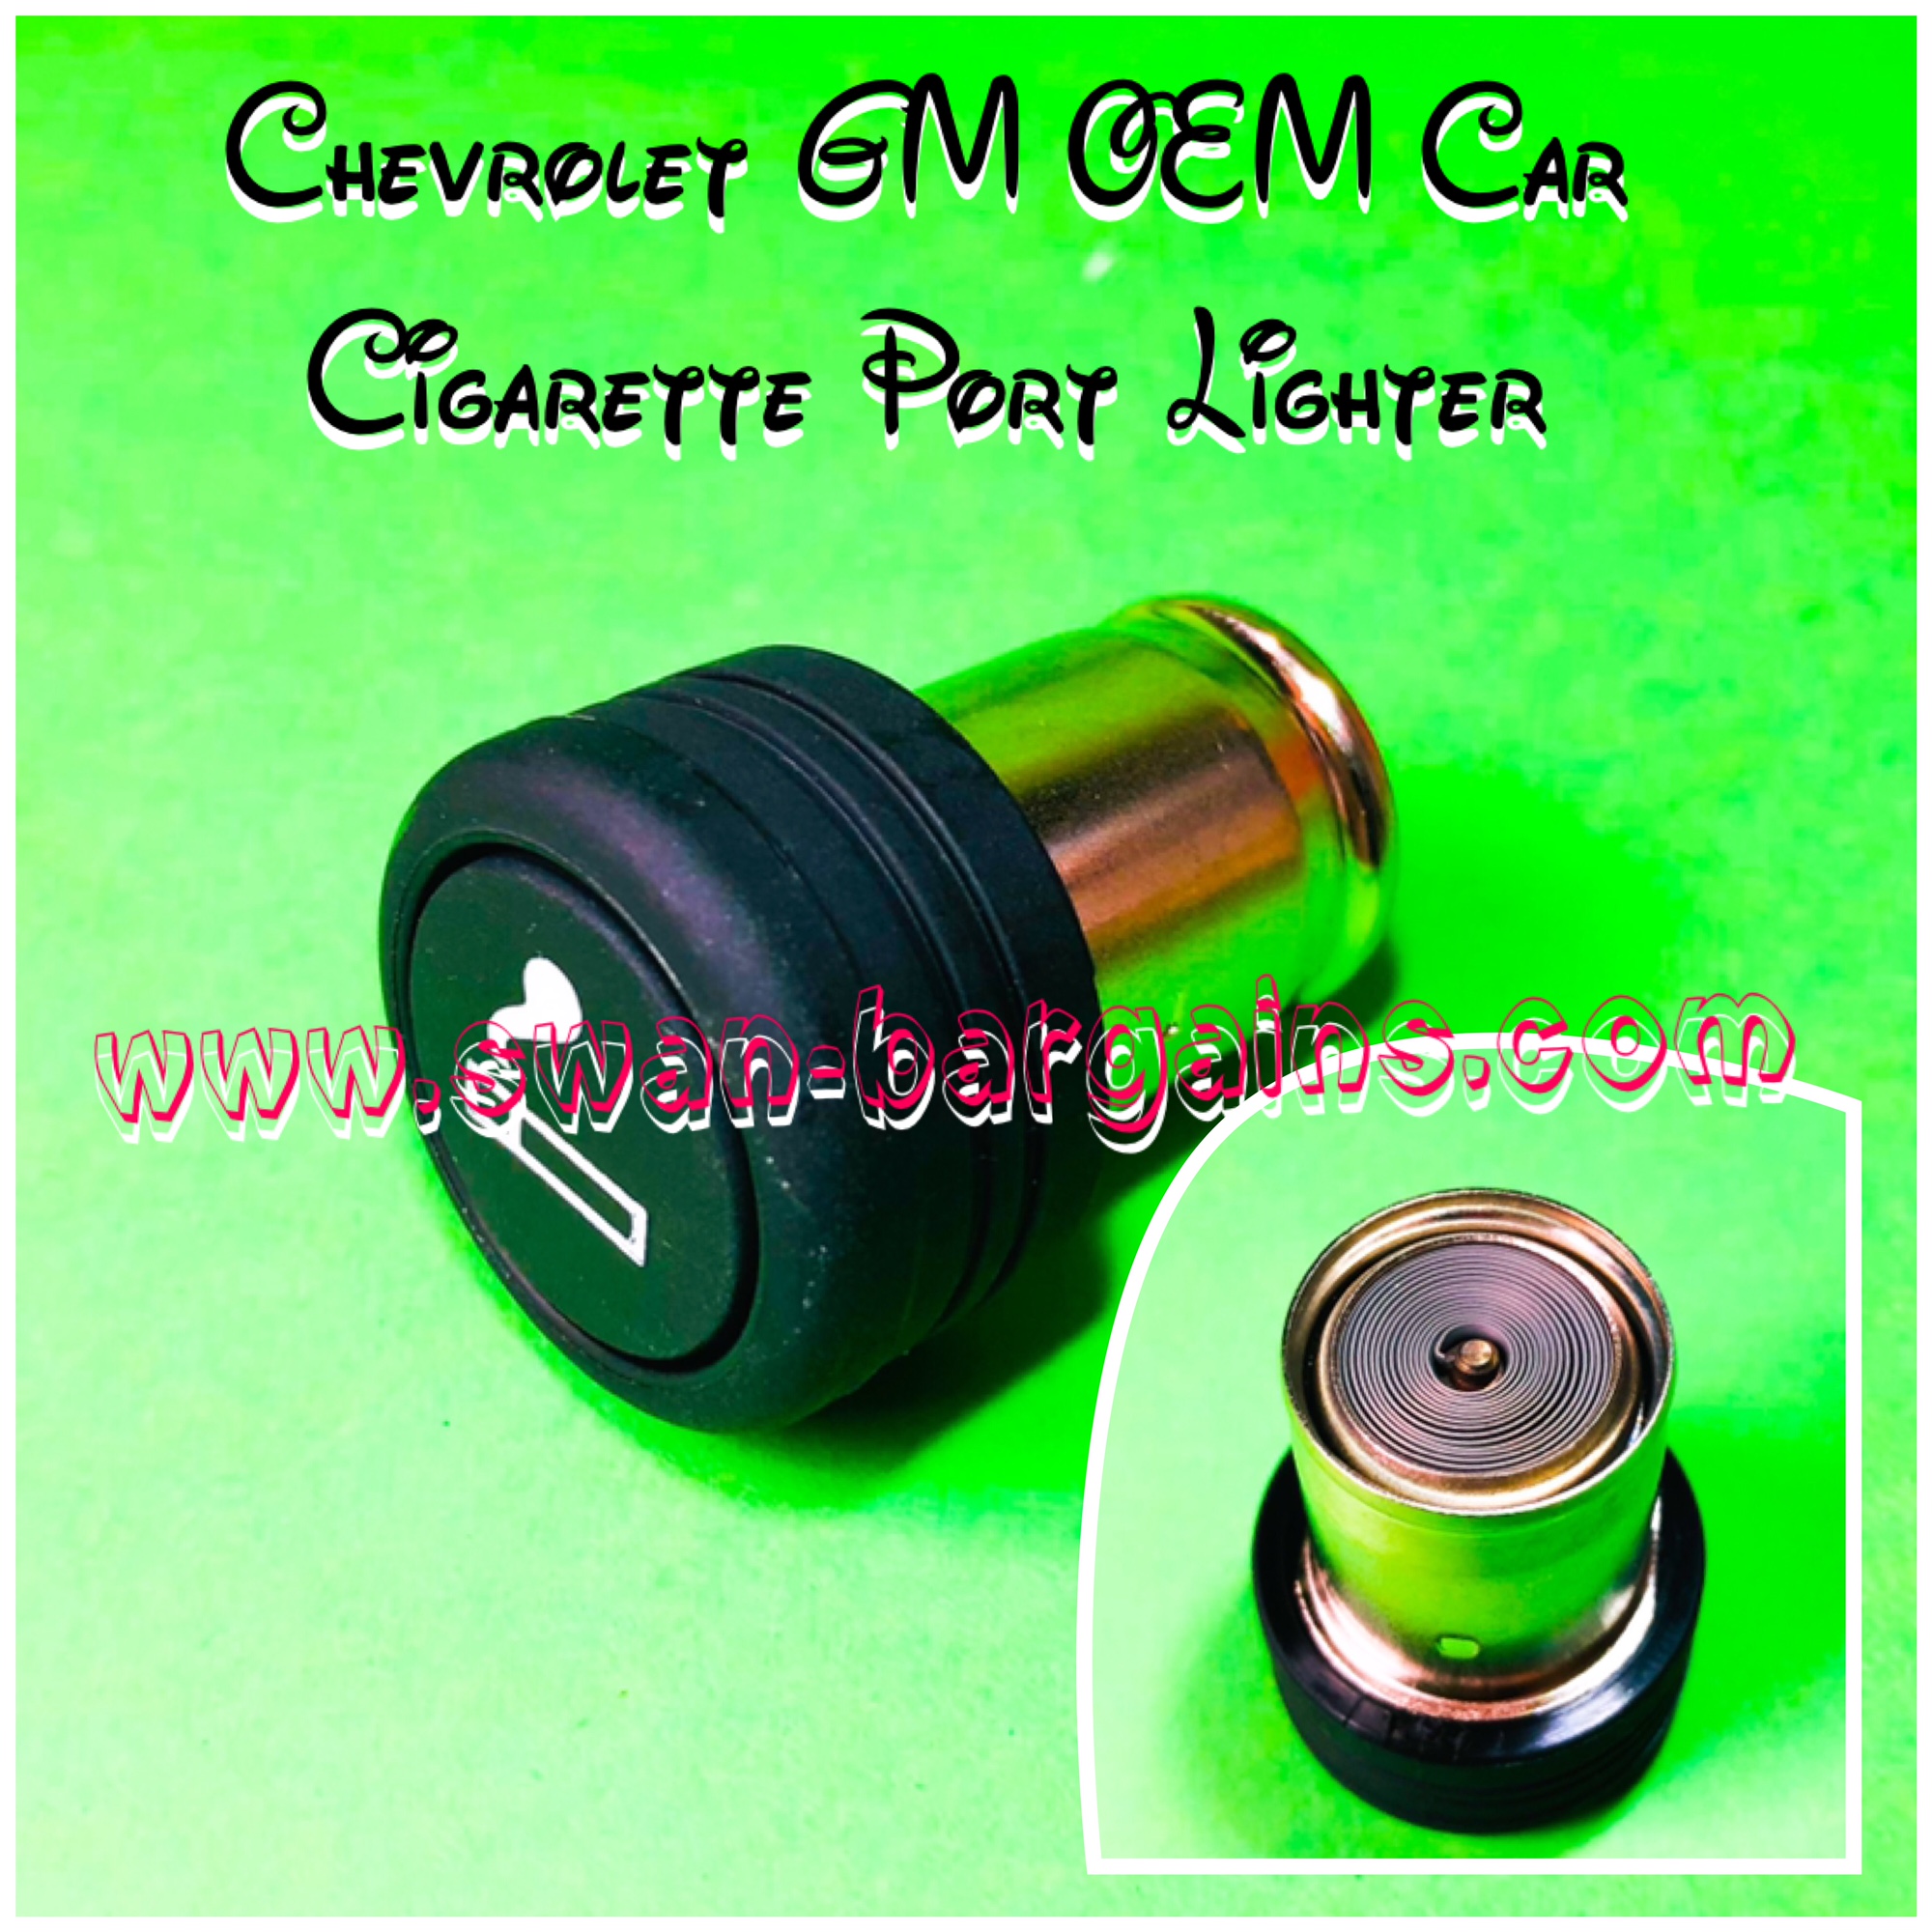 Chevrolet GM Cruze OEM Cigarette Lighter Singapore